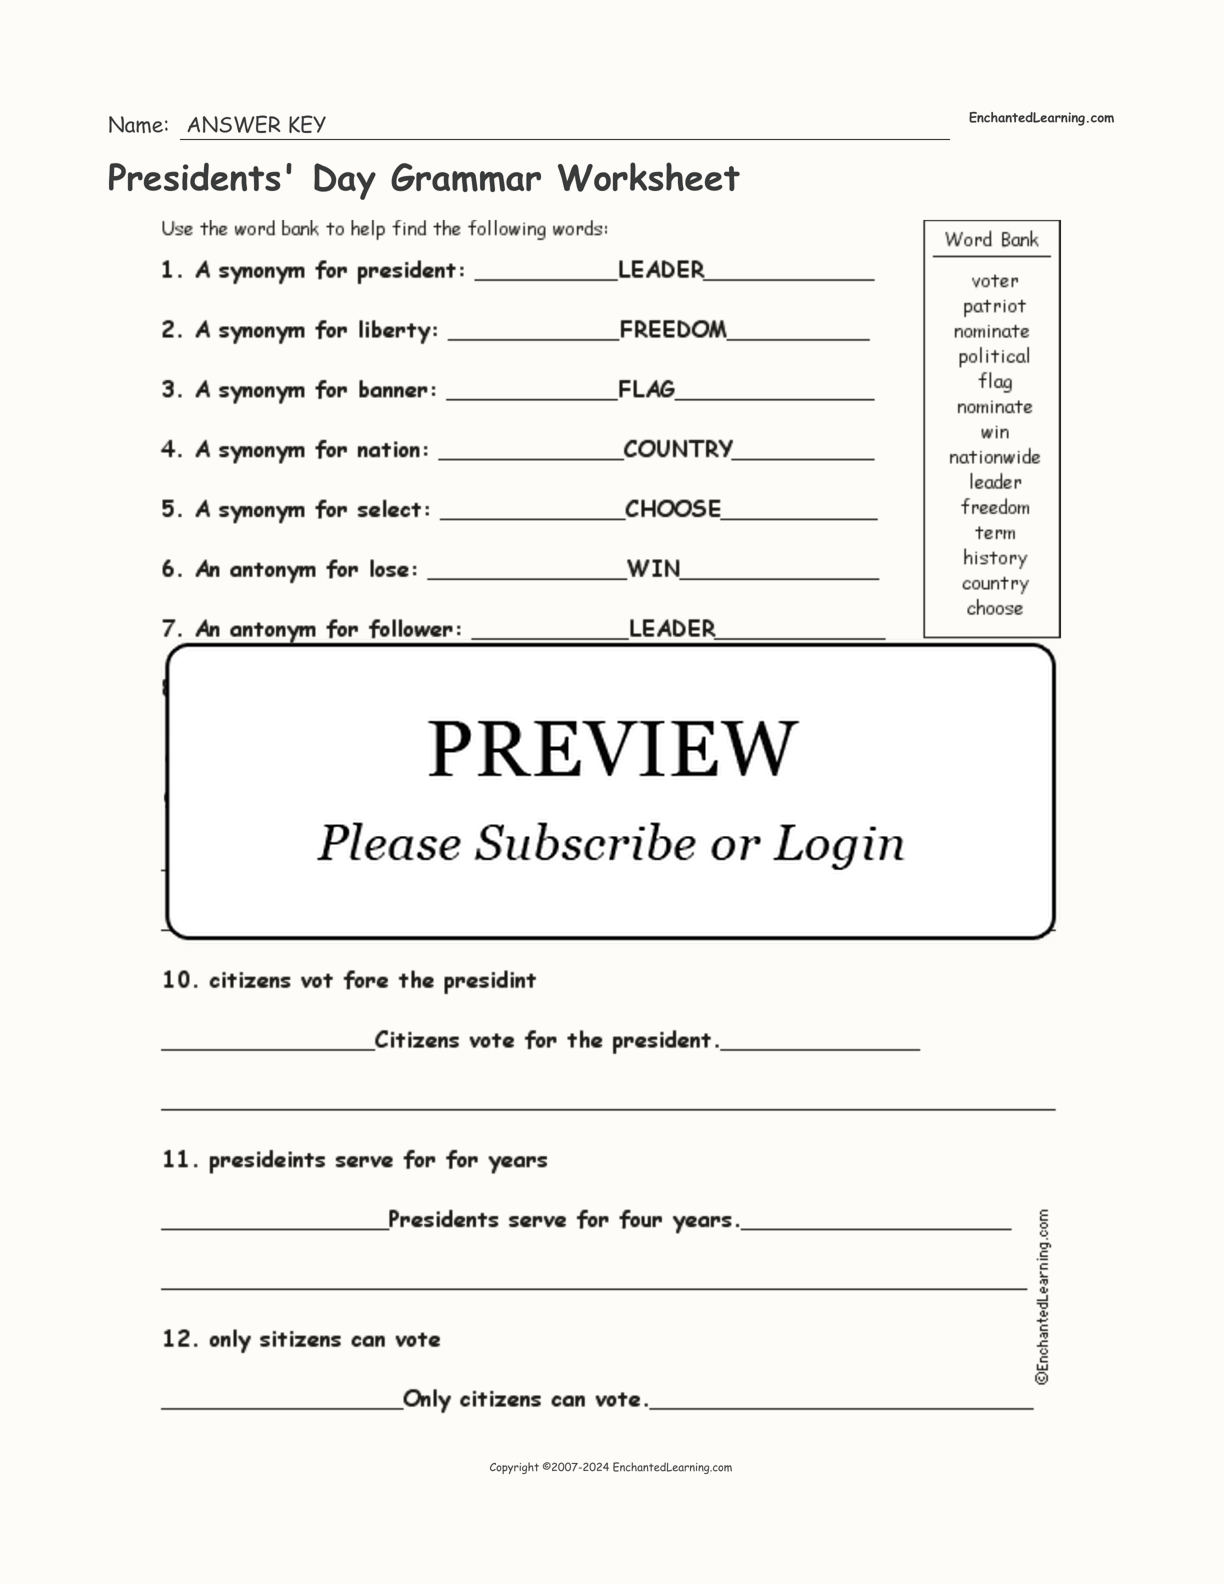 Presidents' Day Grammar Worksheet interactive worksheet page 2